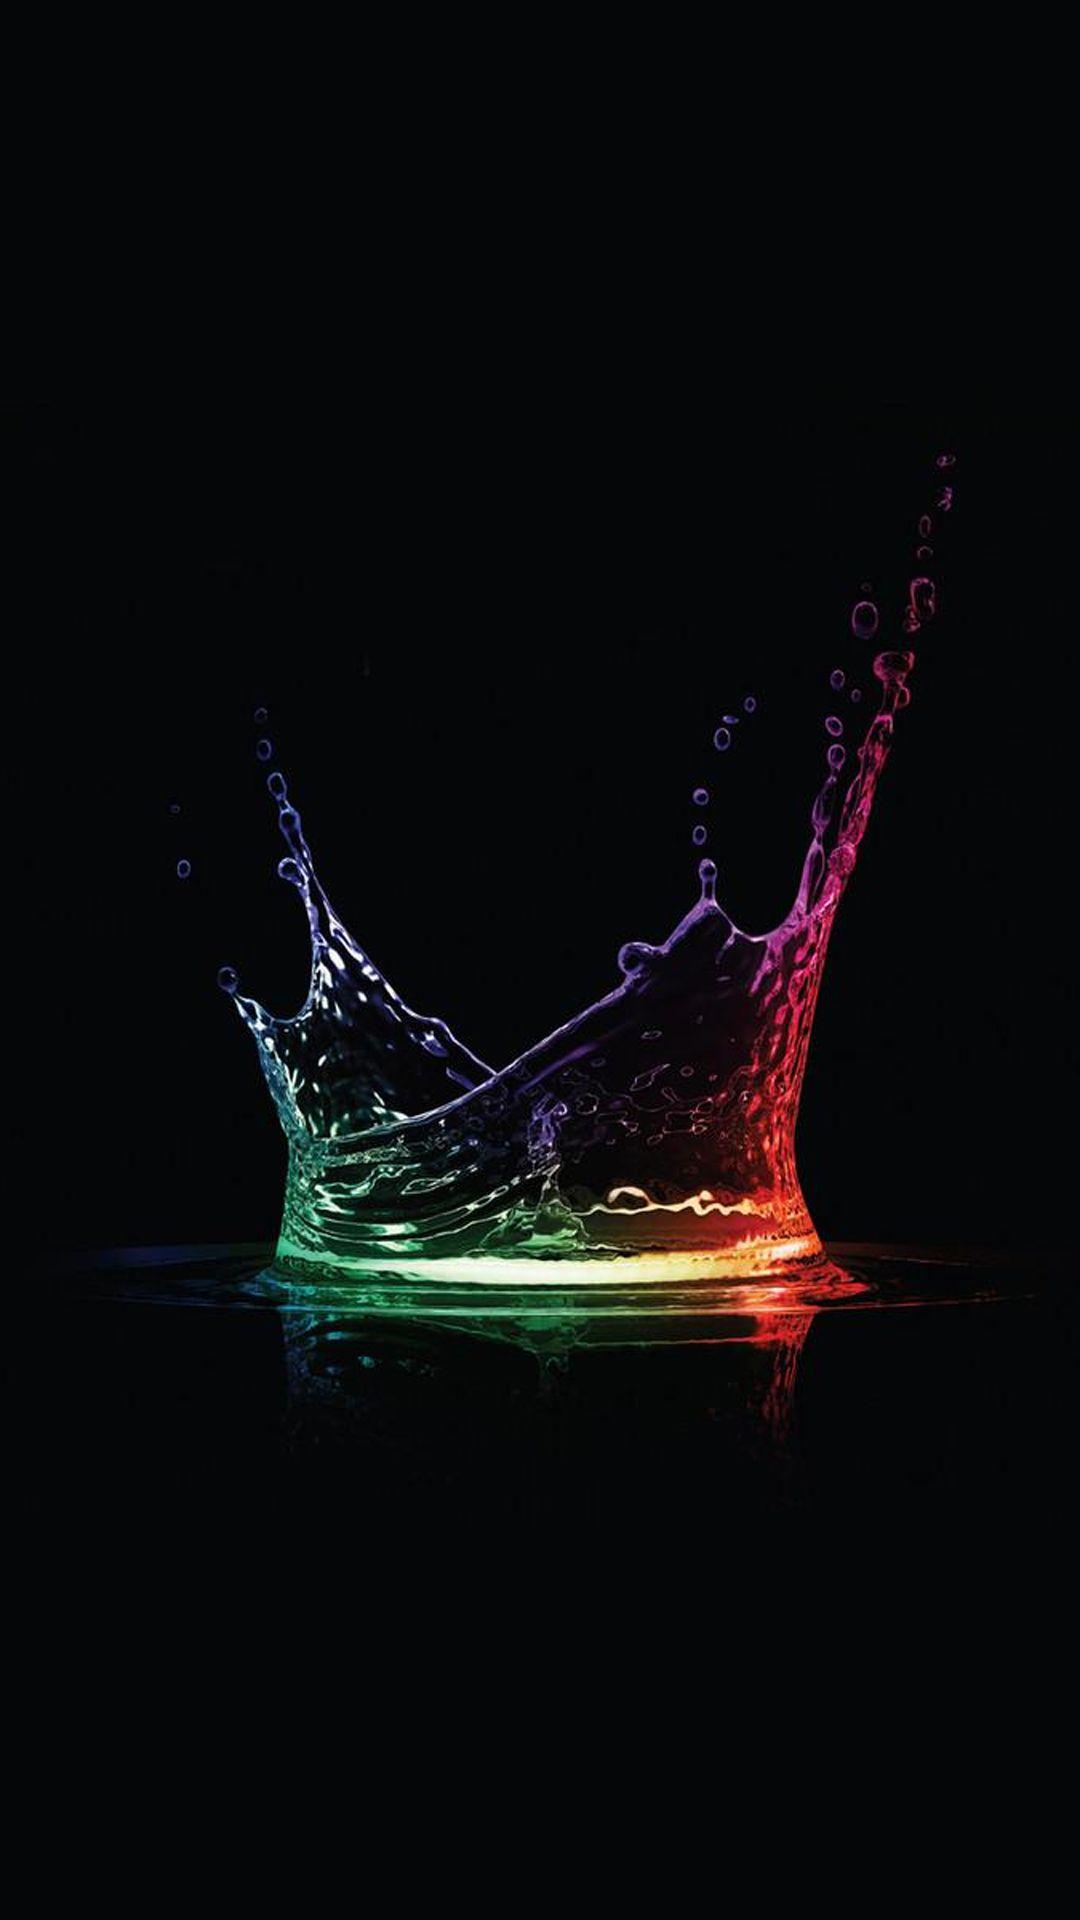 Colored Liquid Splash Android Wallpaper free download